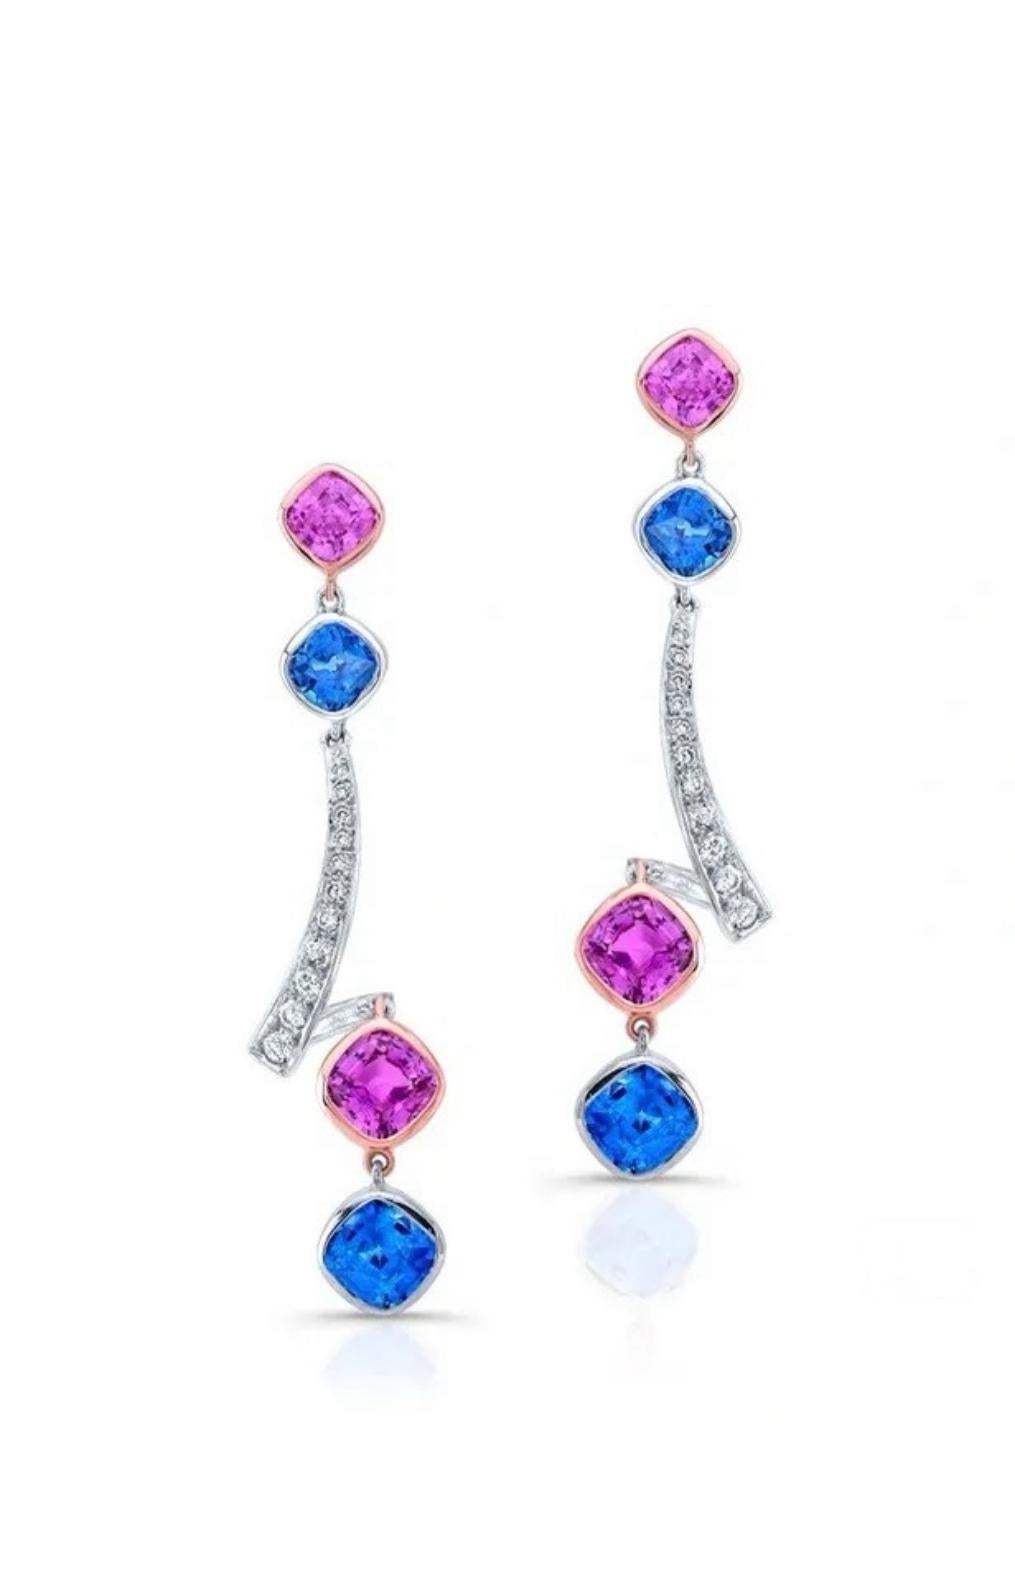 Cushion Cut Cushion-cut, Pink and blue Ceylon Sapphire earrings. 7.59 carats. For Sale